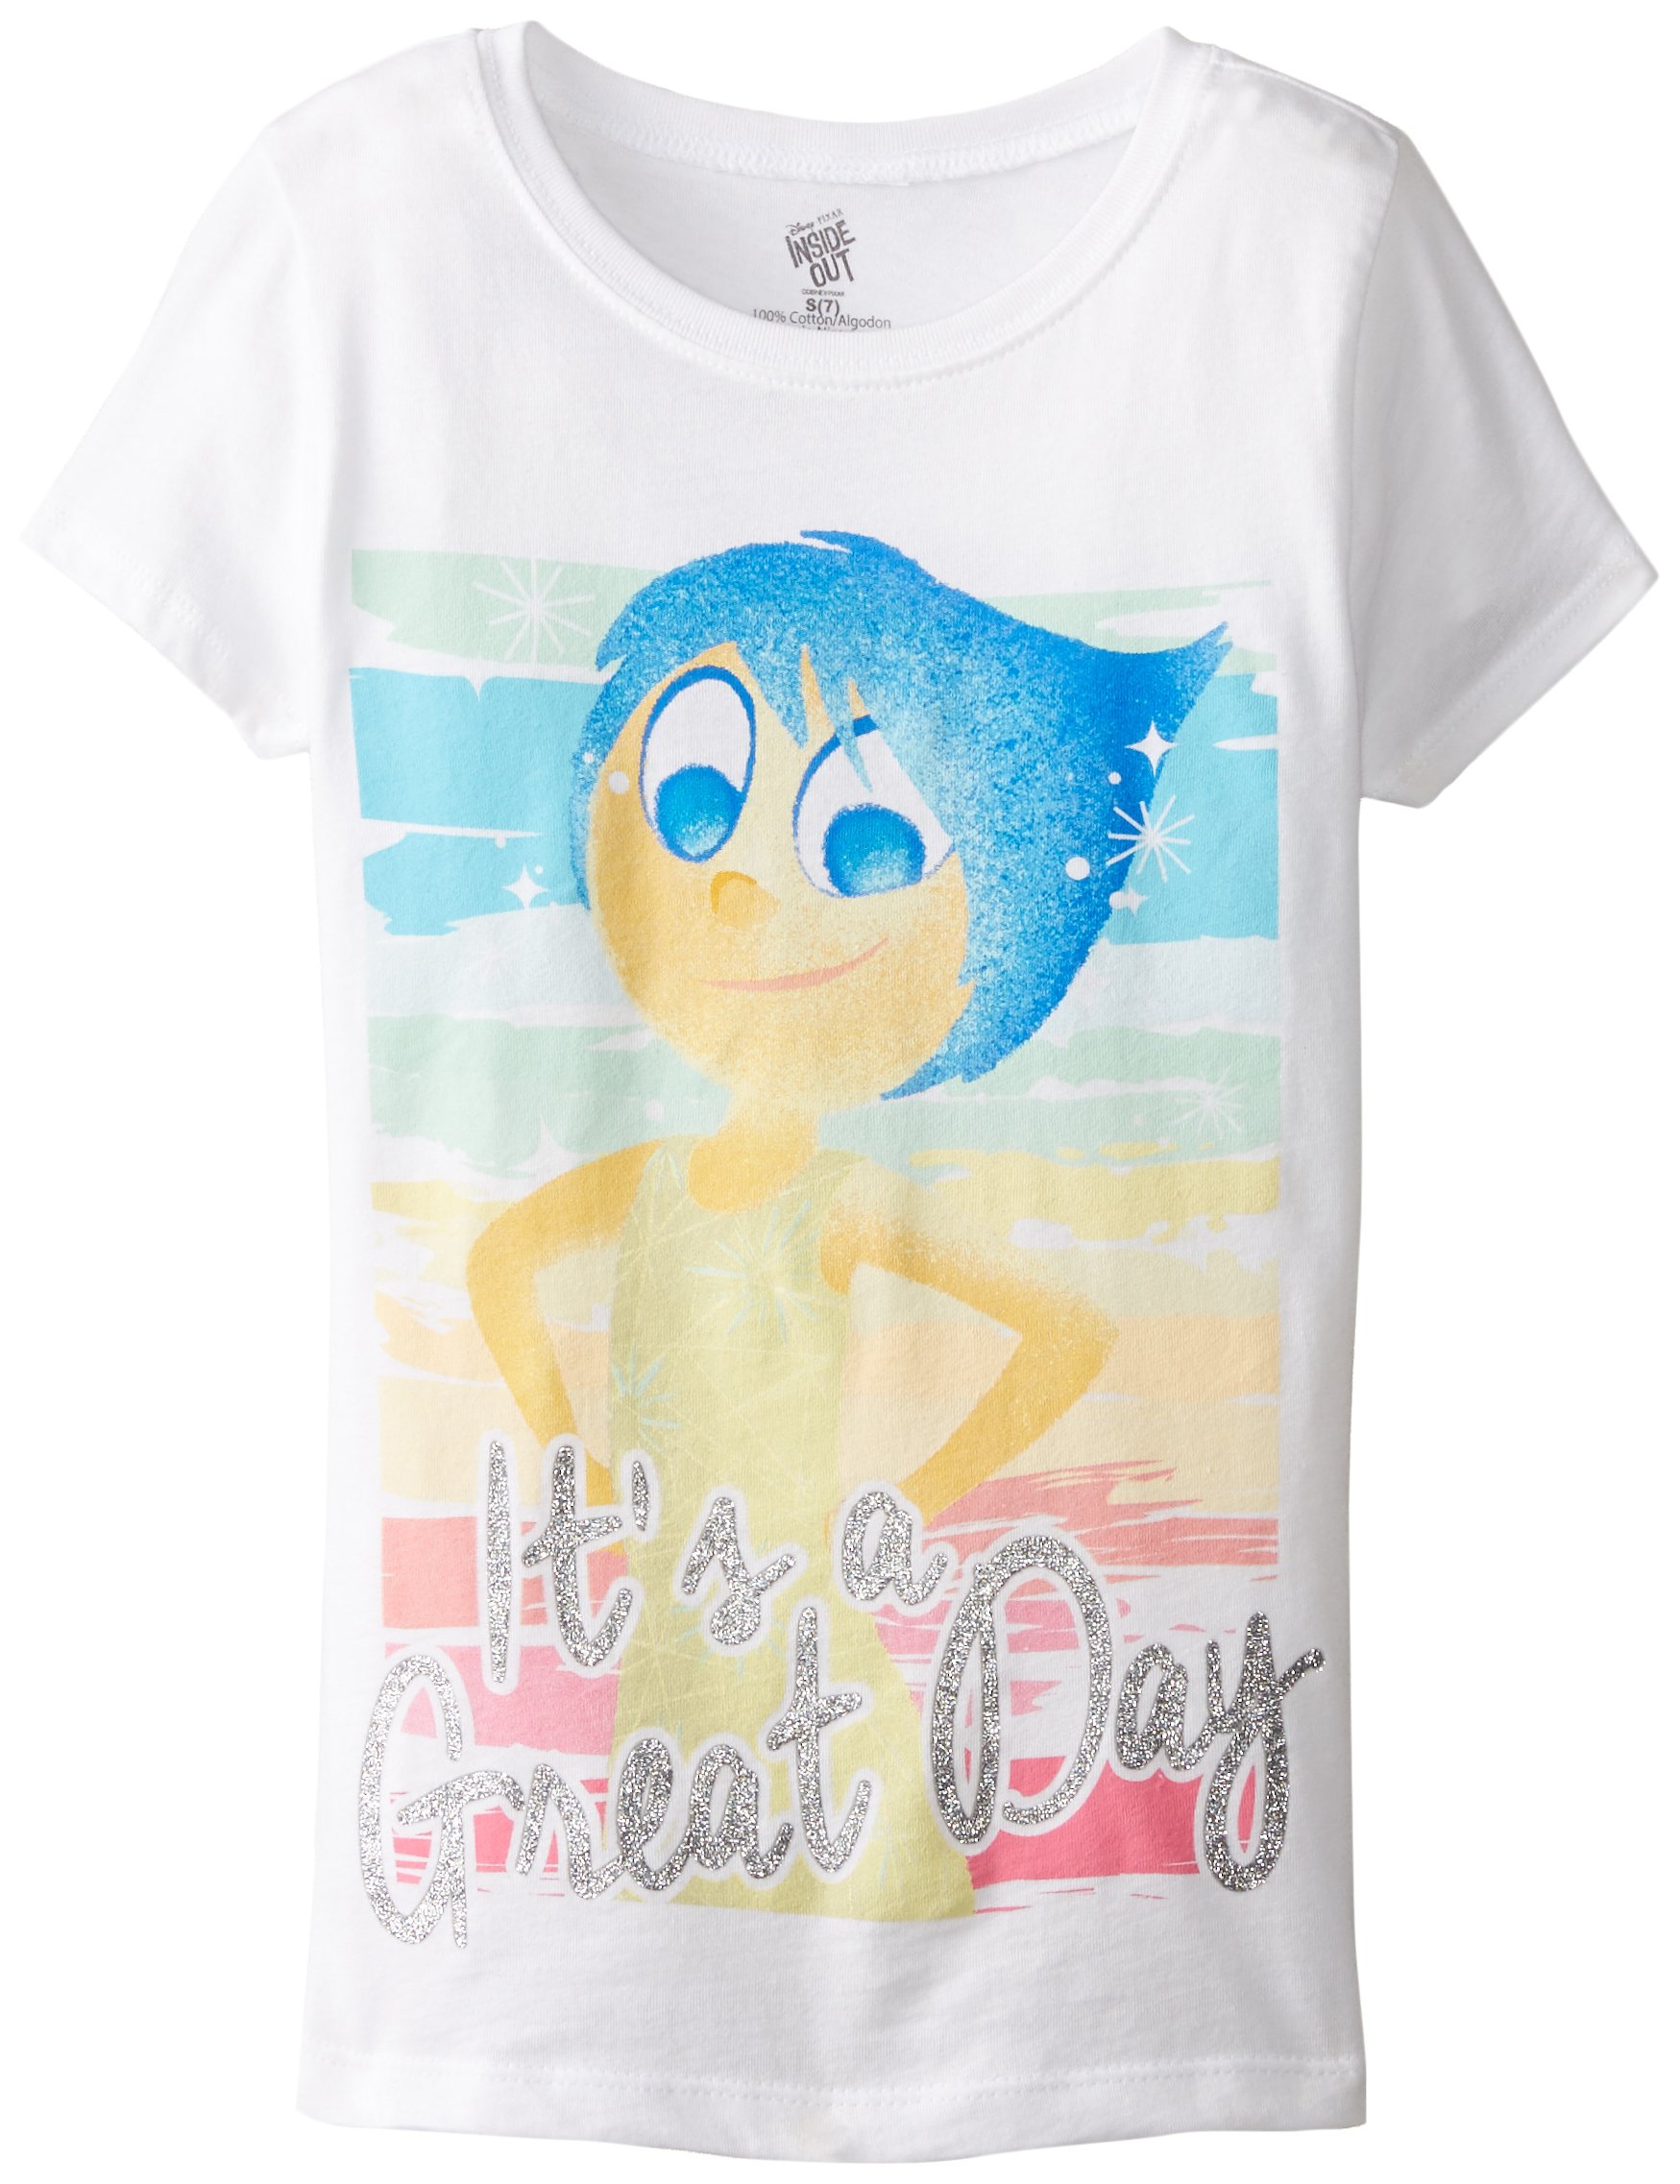 Disney Girls' Inside Out Joy T-shirt - "It's A Great Day!" in white